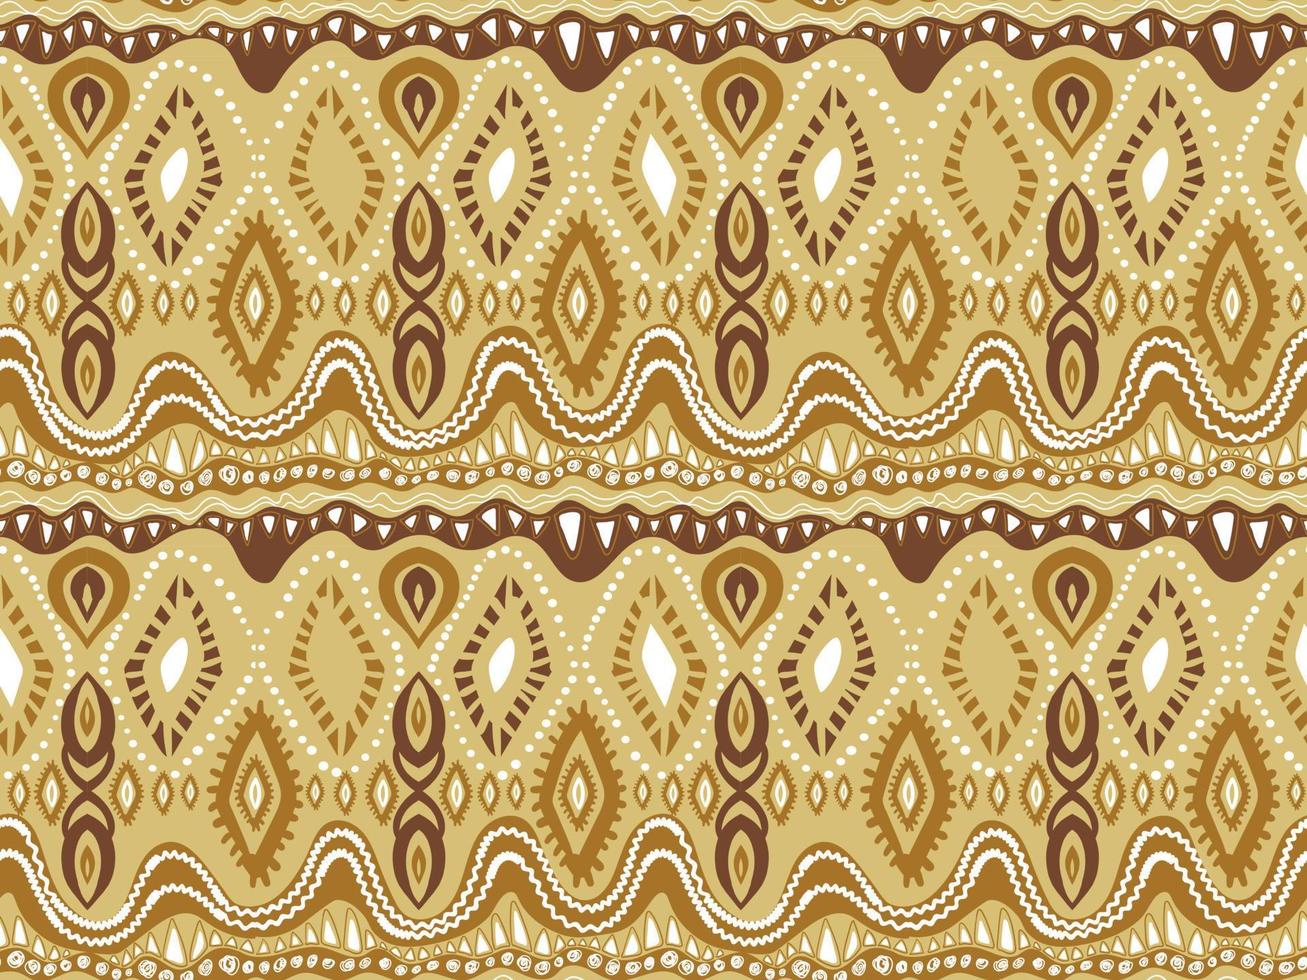 traditionell orientalisk etnisk geometrisk mönster bakgrund design matta tapet kläder slå in vektor illustration broderi stil